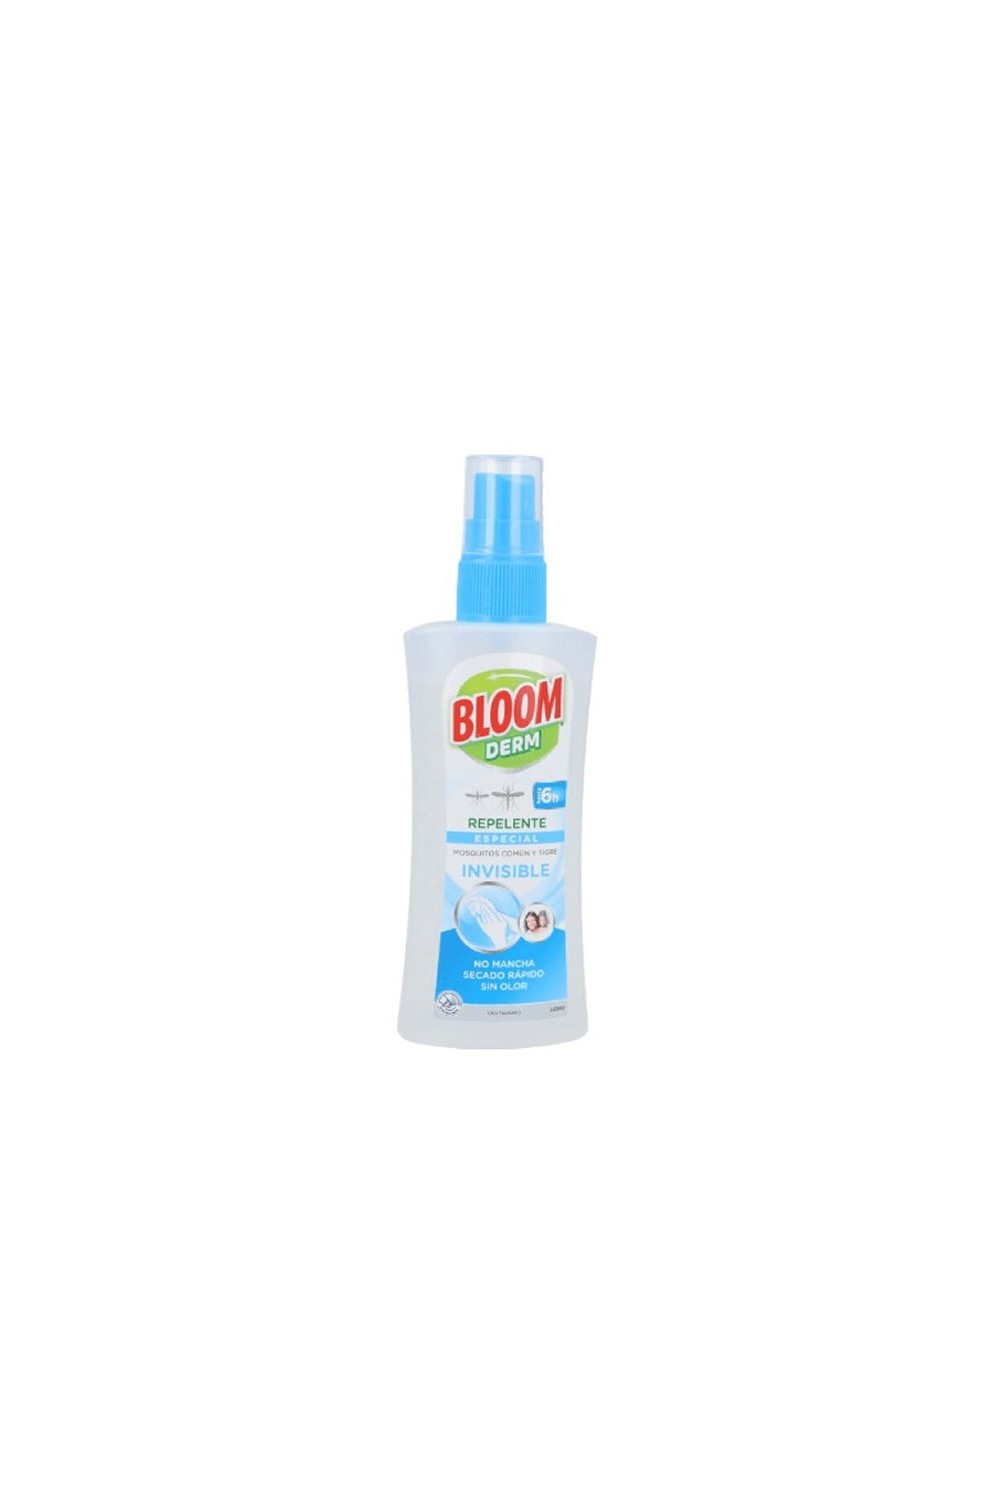 Bloom Derm Invisible Repellent 100ml